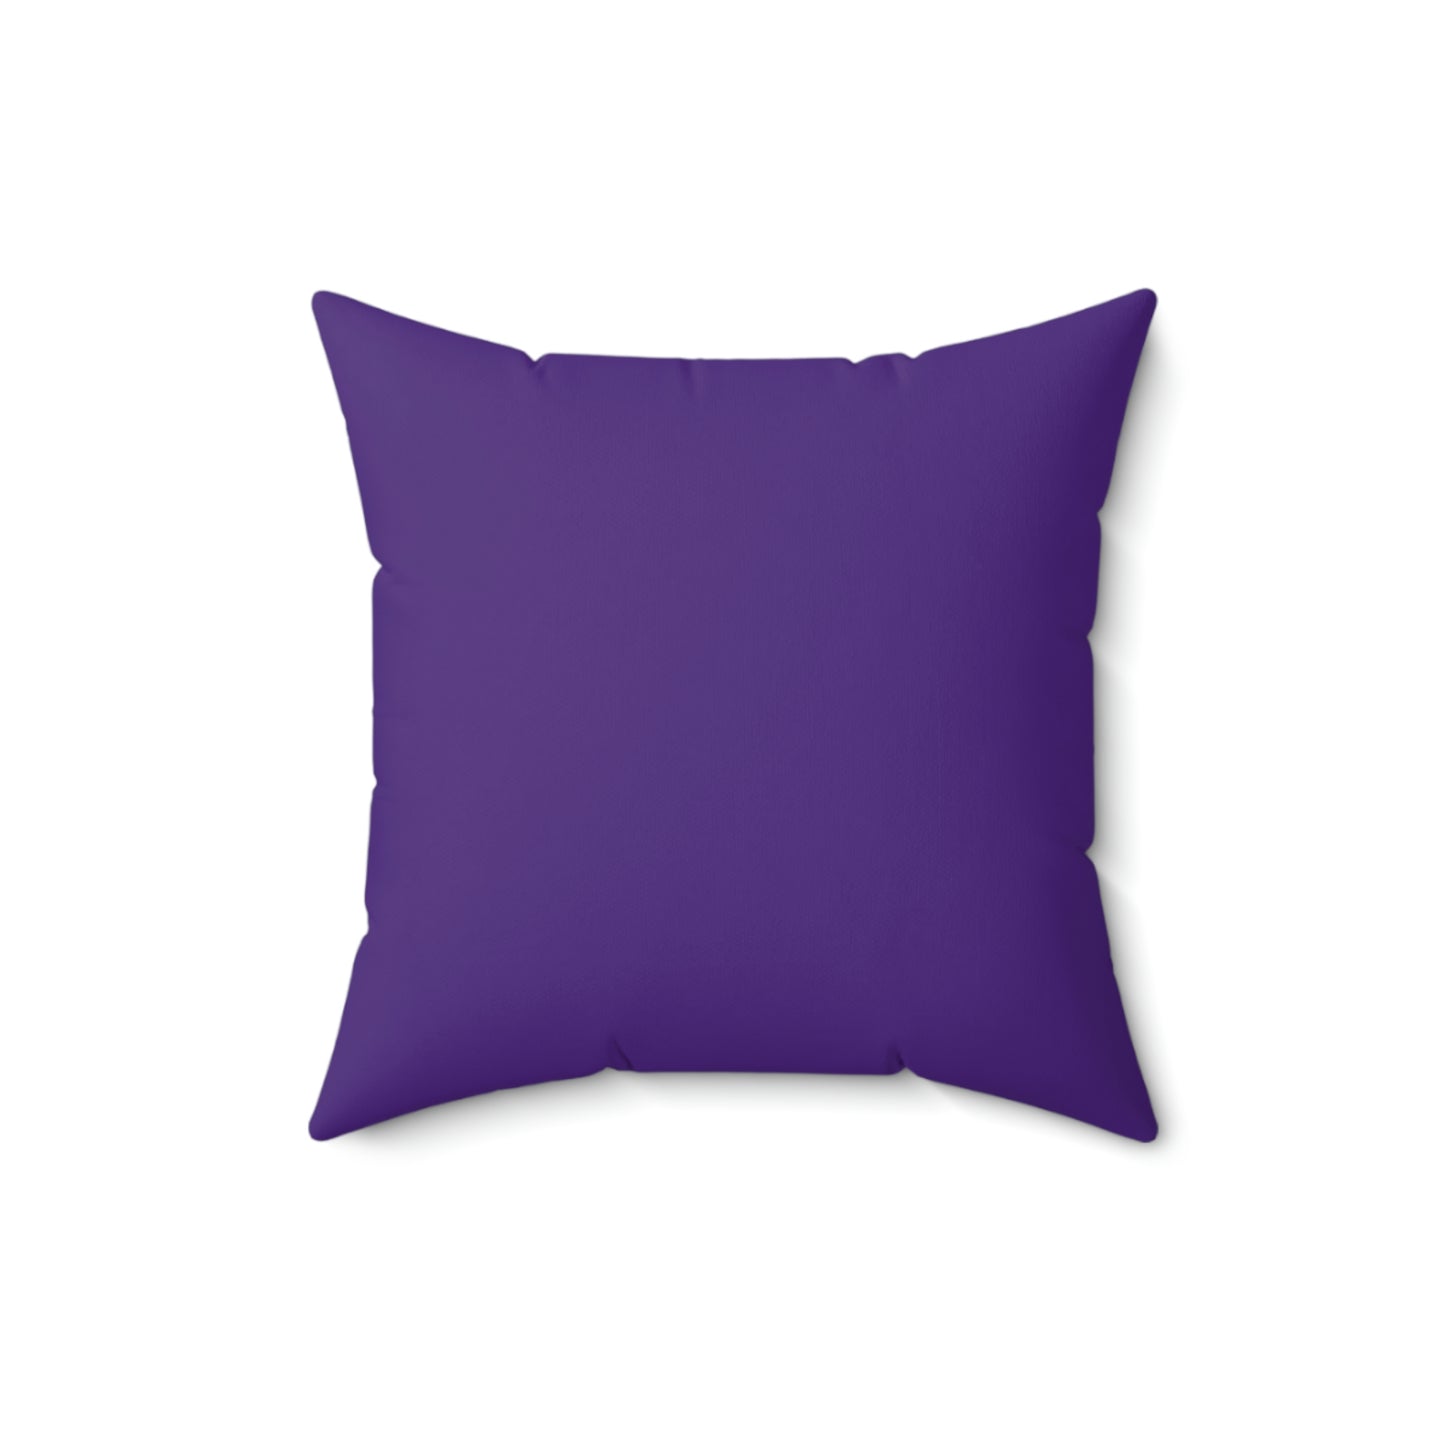 Spun Polyester Square Pillow Case "Midnight Run on Purple”